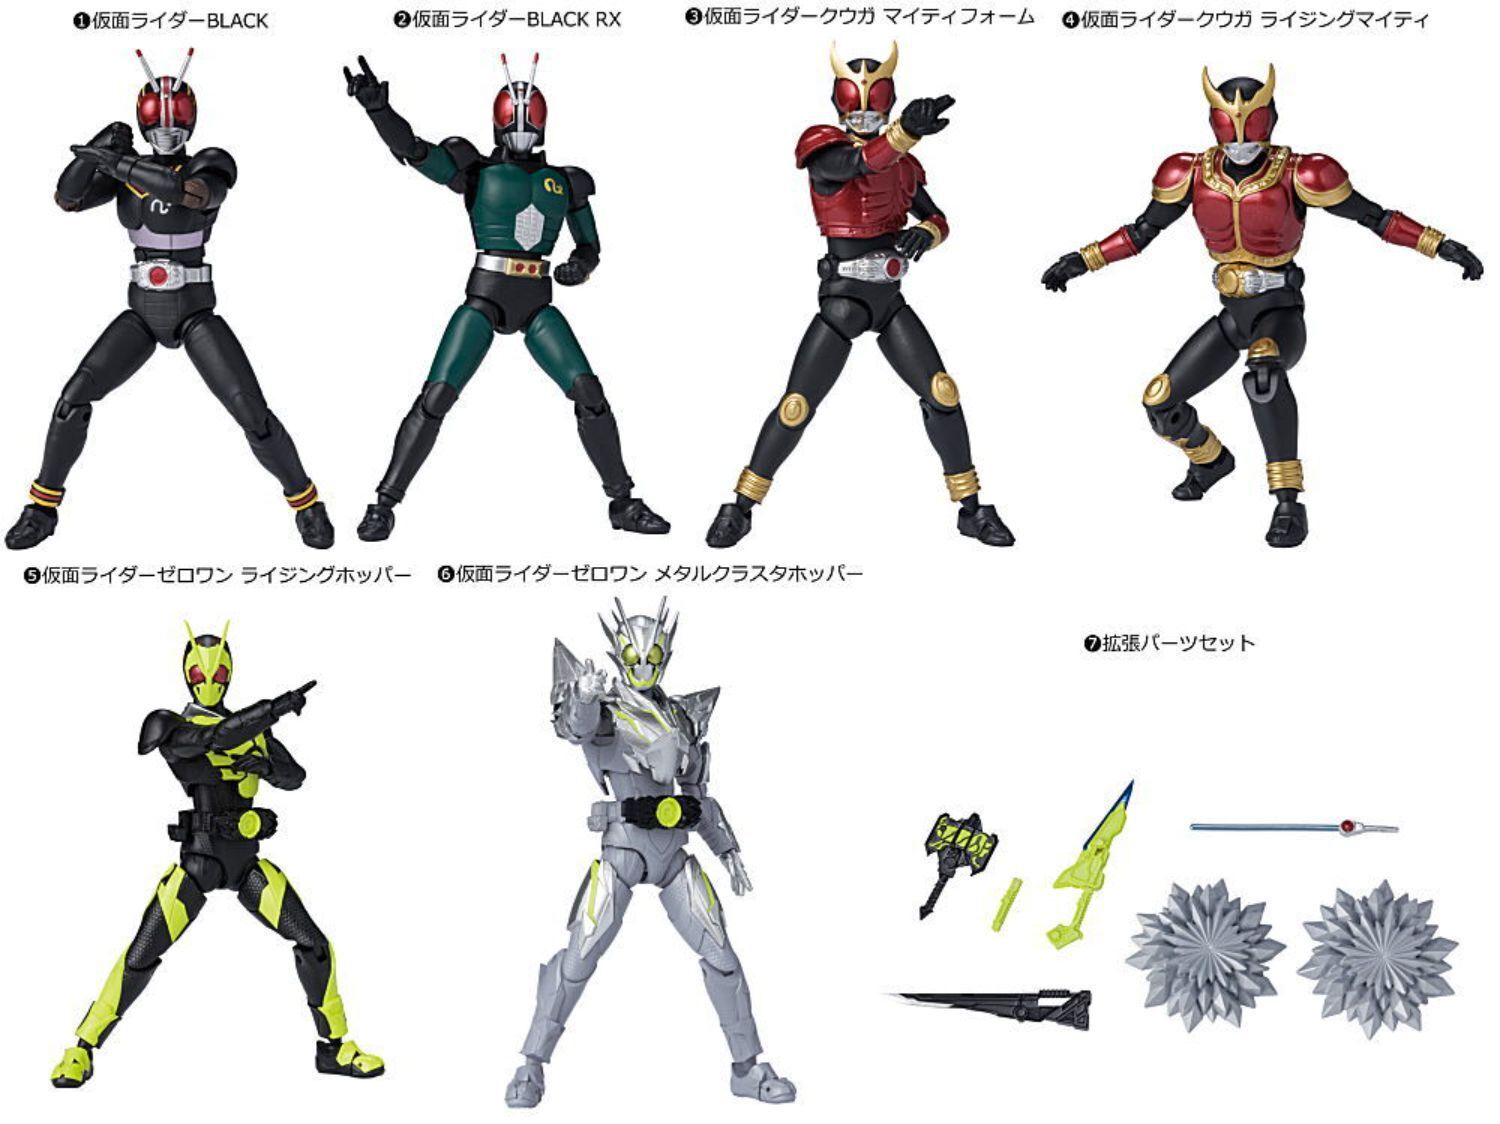 SHODO-XX Kamen Rider BANDAI Collection Toy 7 Types Comp Set Figure Mascot New